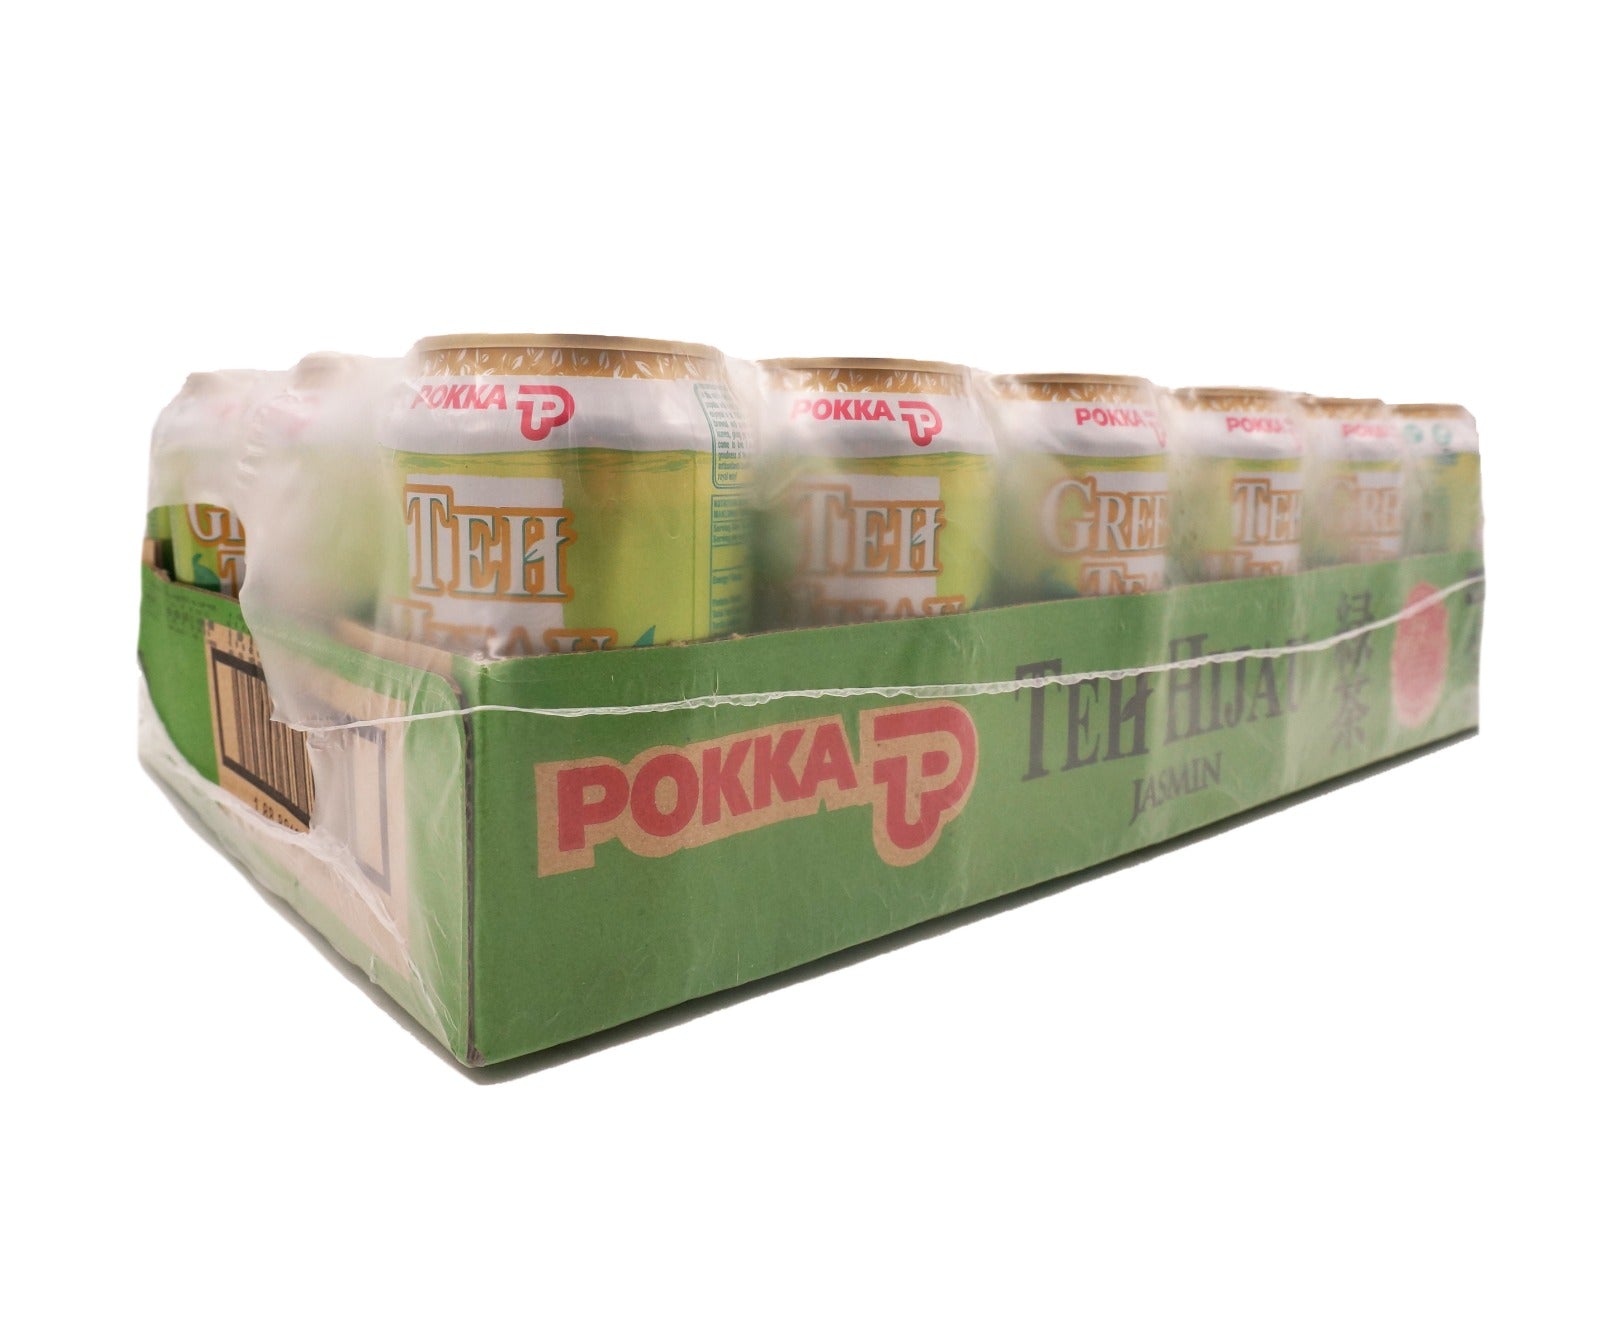 Pokka Green Tea Can (24 x 300ml - Carton)